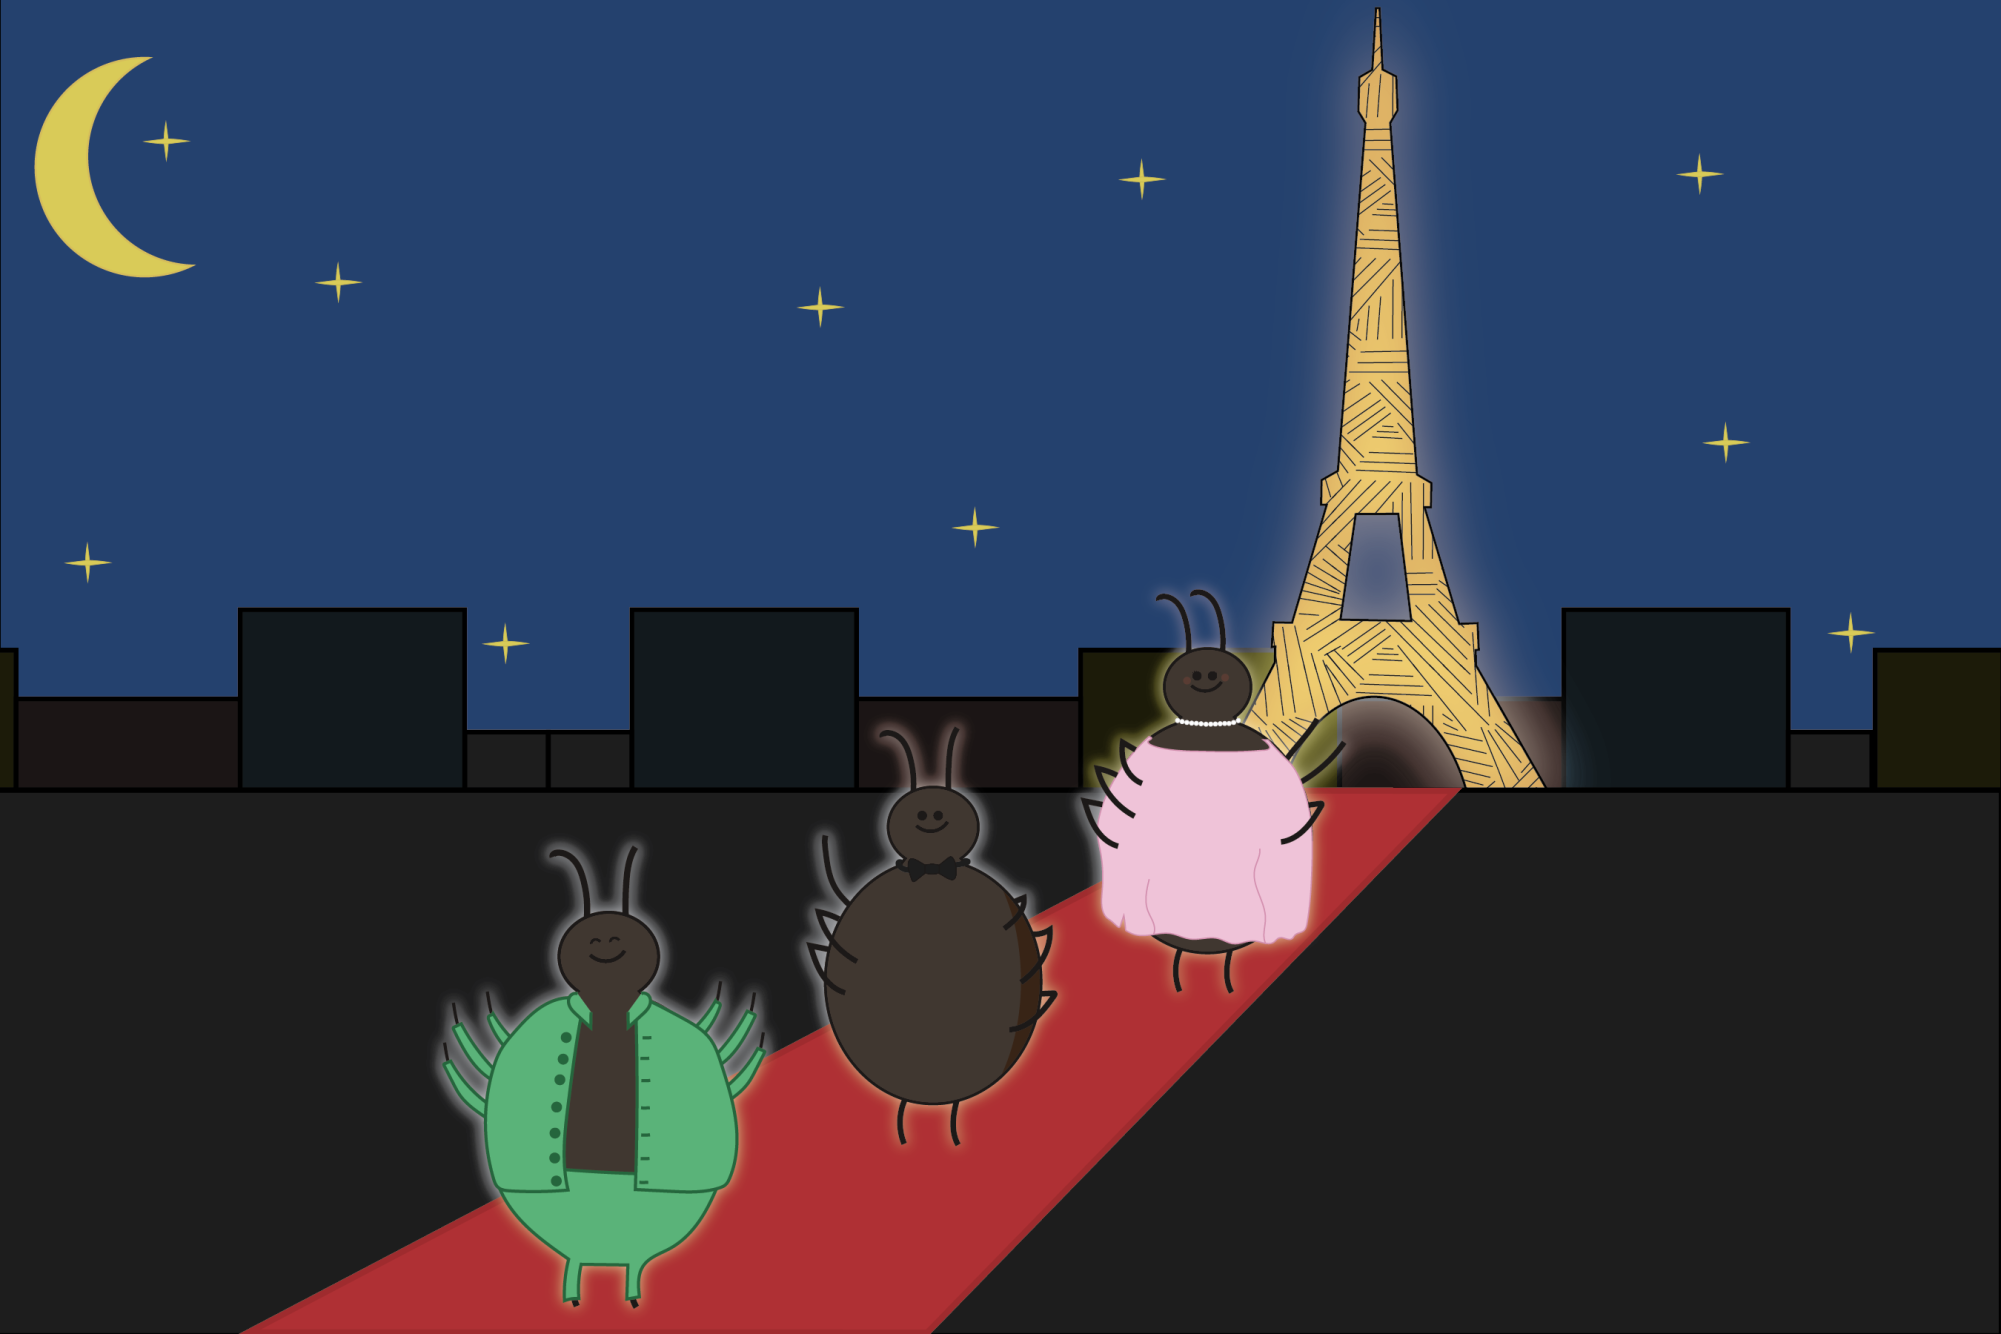 Will Paris Fashion Week Bedbugs Follow Travelers to NYC?